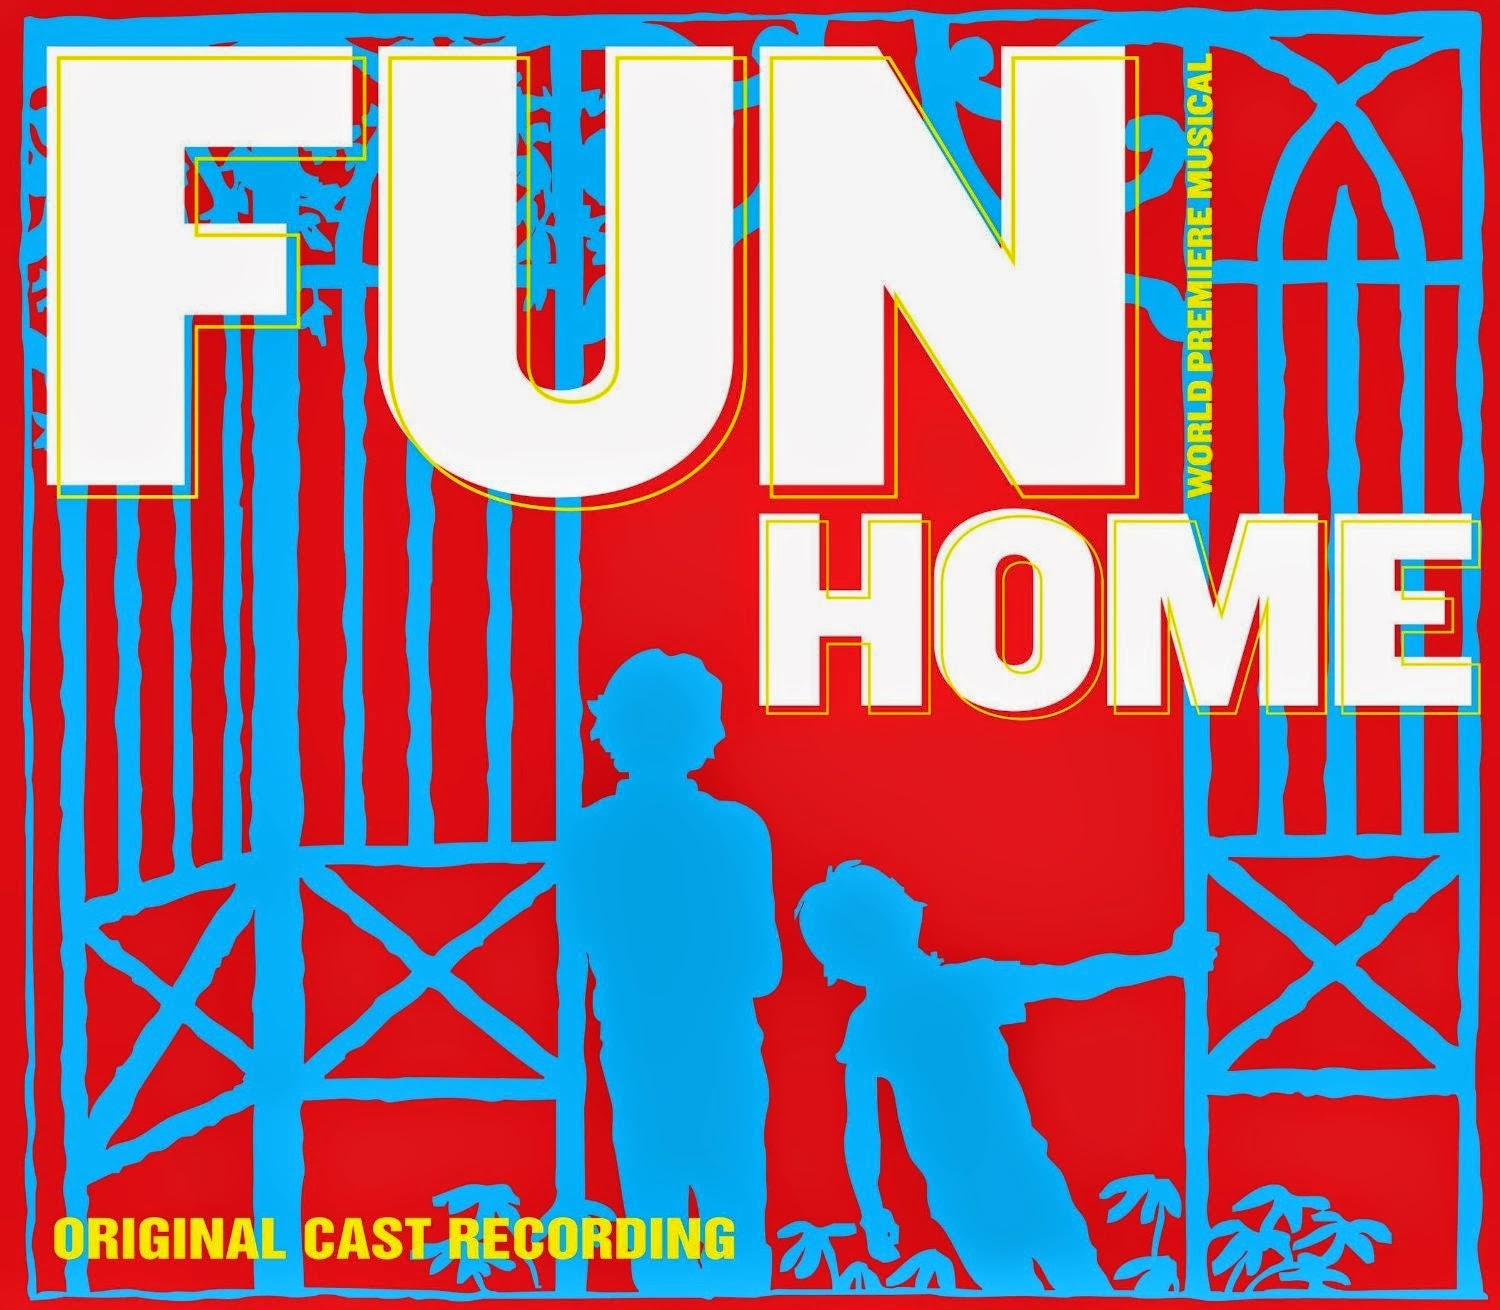 Fun обложка. Fun Home. Organisation for fun обложка альбома. Полматери фан обложка. Home soundtrack